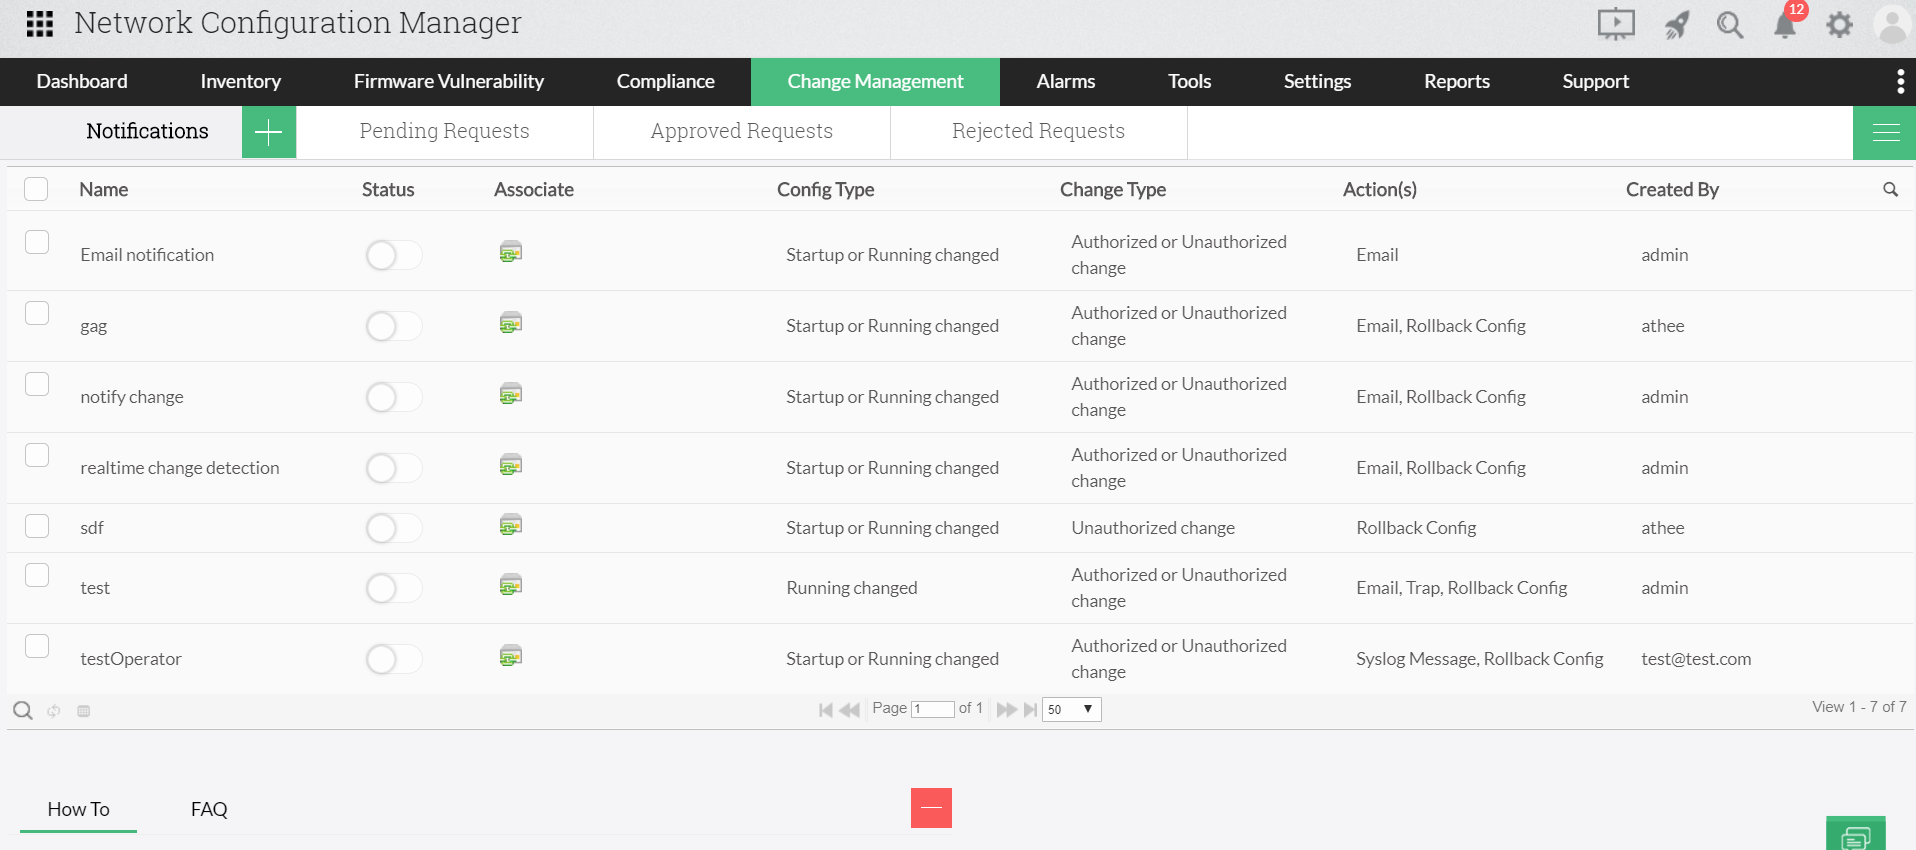 Manage Netgear configuration changes - ManageEngine Network Configuration Manager